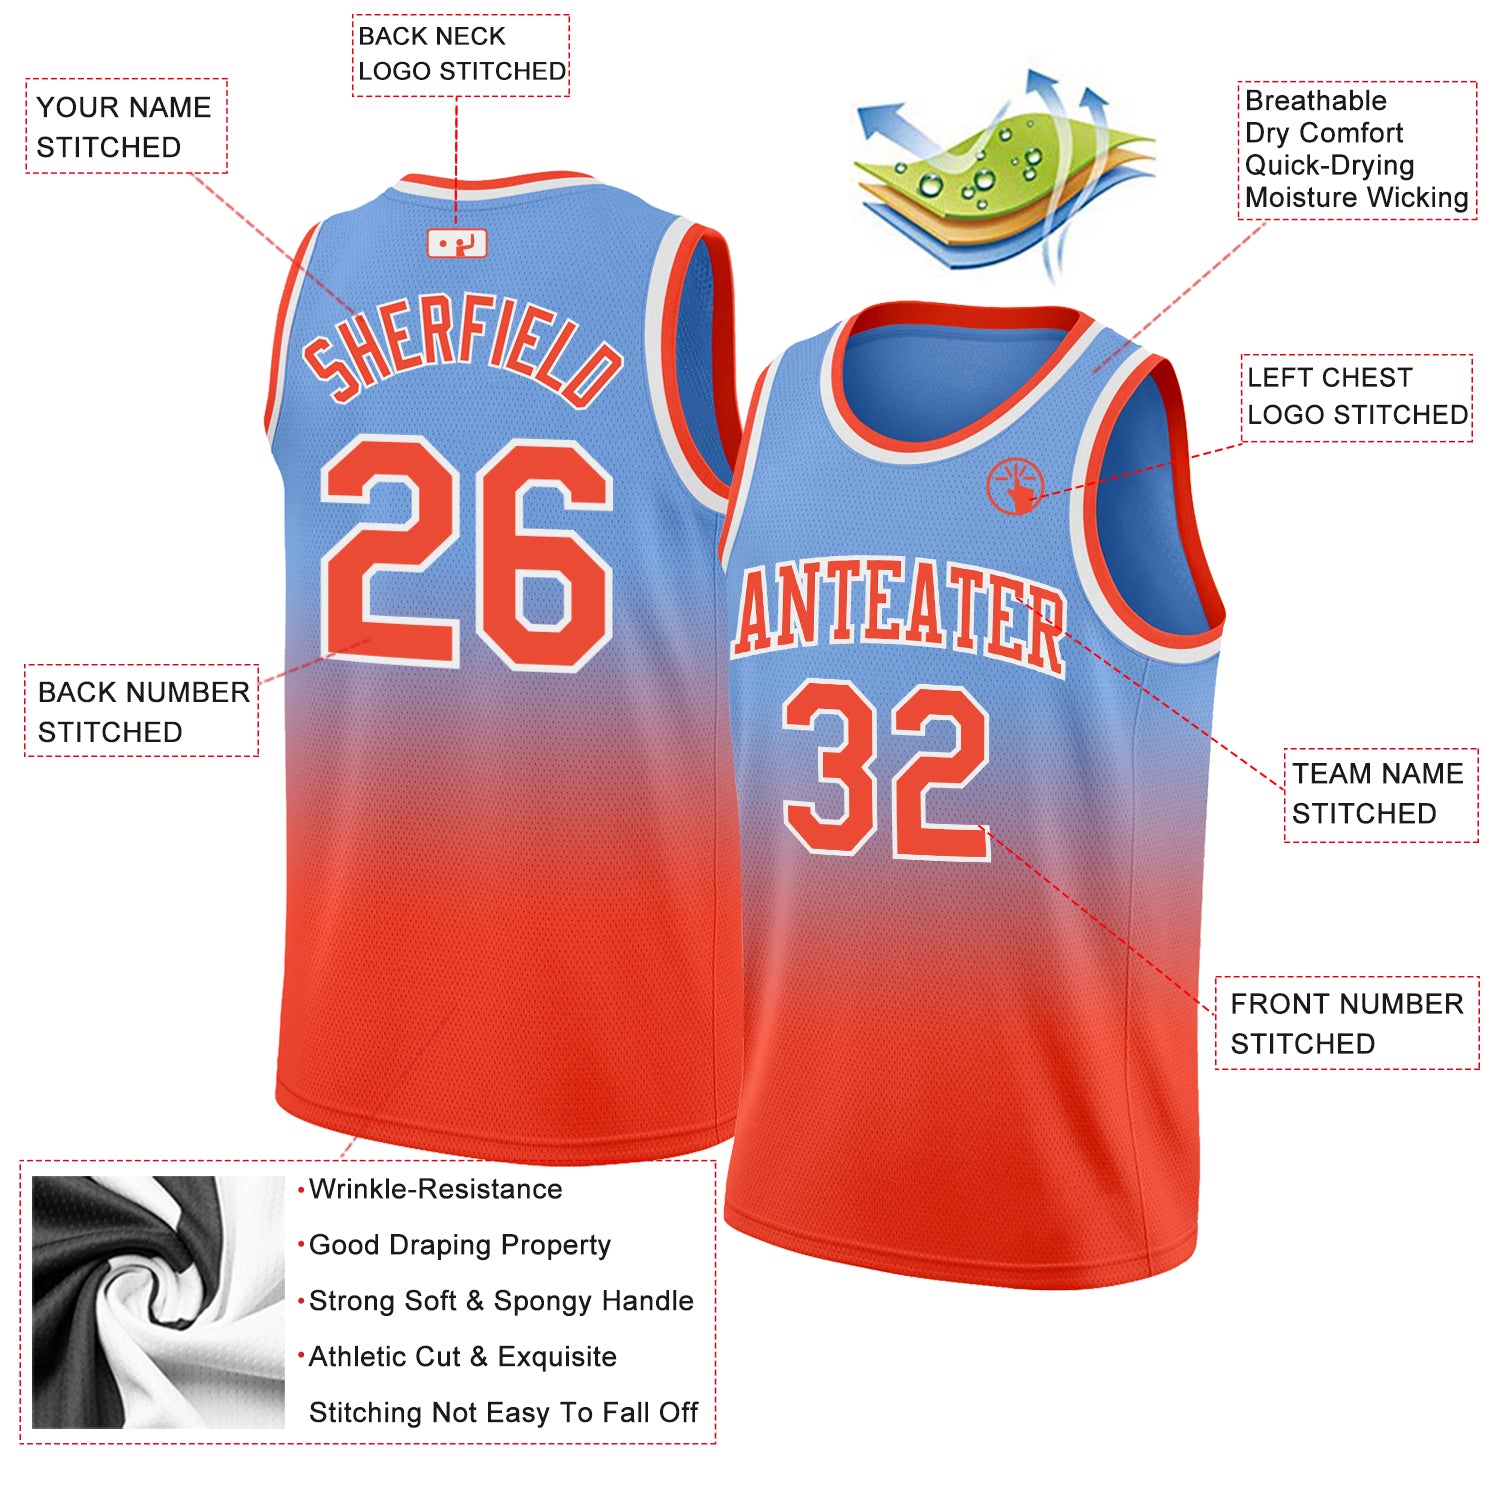 sky blue basketball jersey design